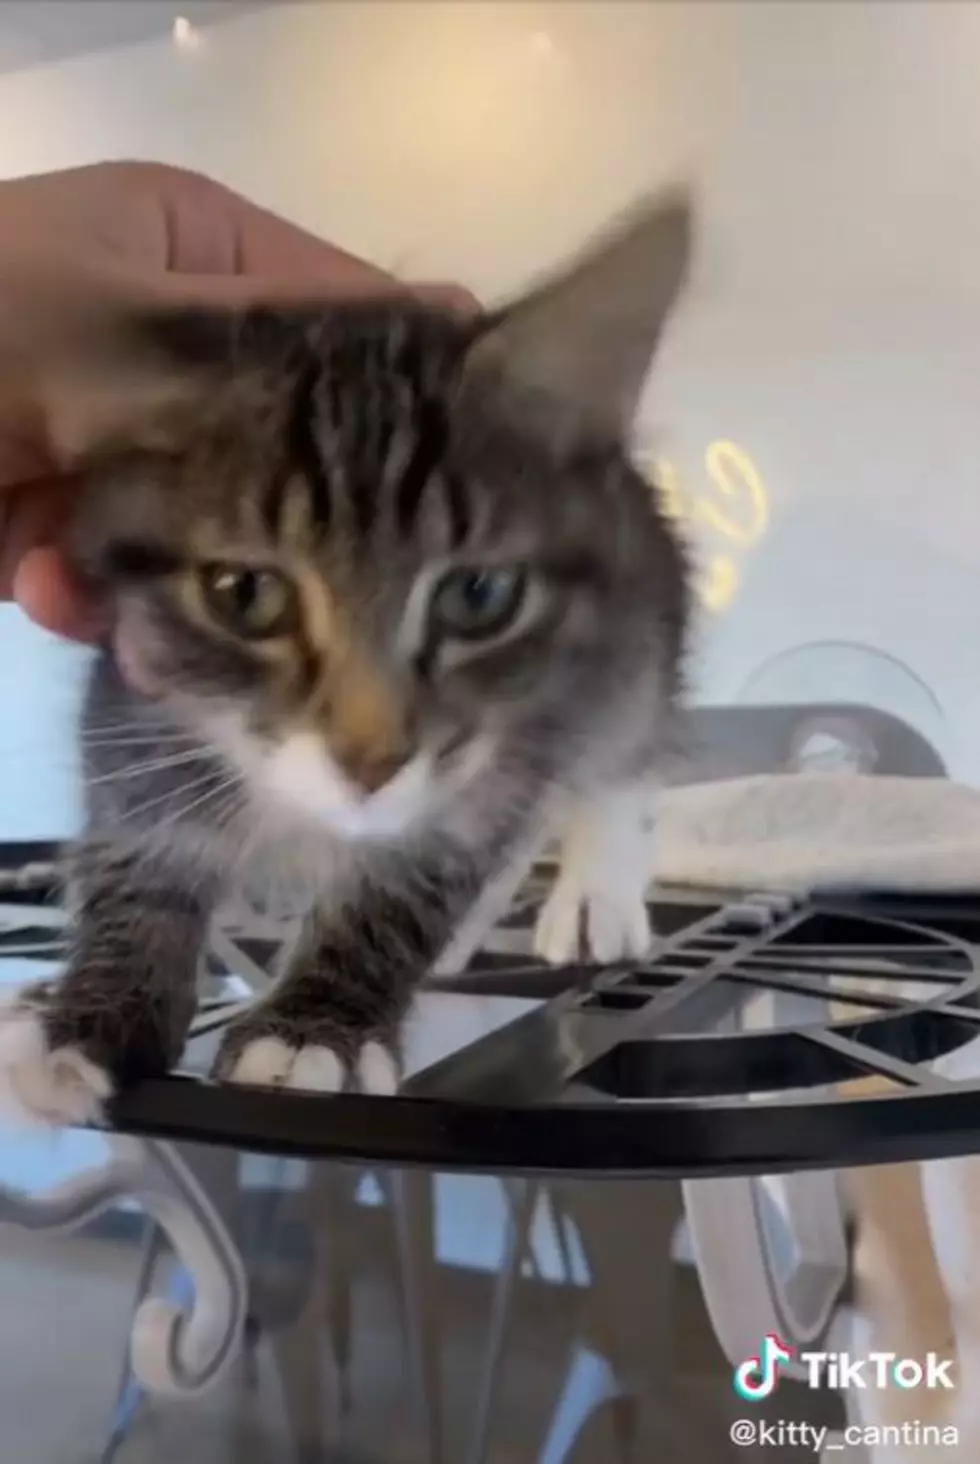 How to Adopt One of Spokane’s Tik Tok Famous Cats